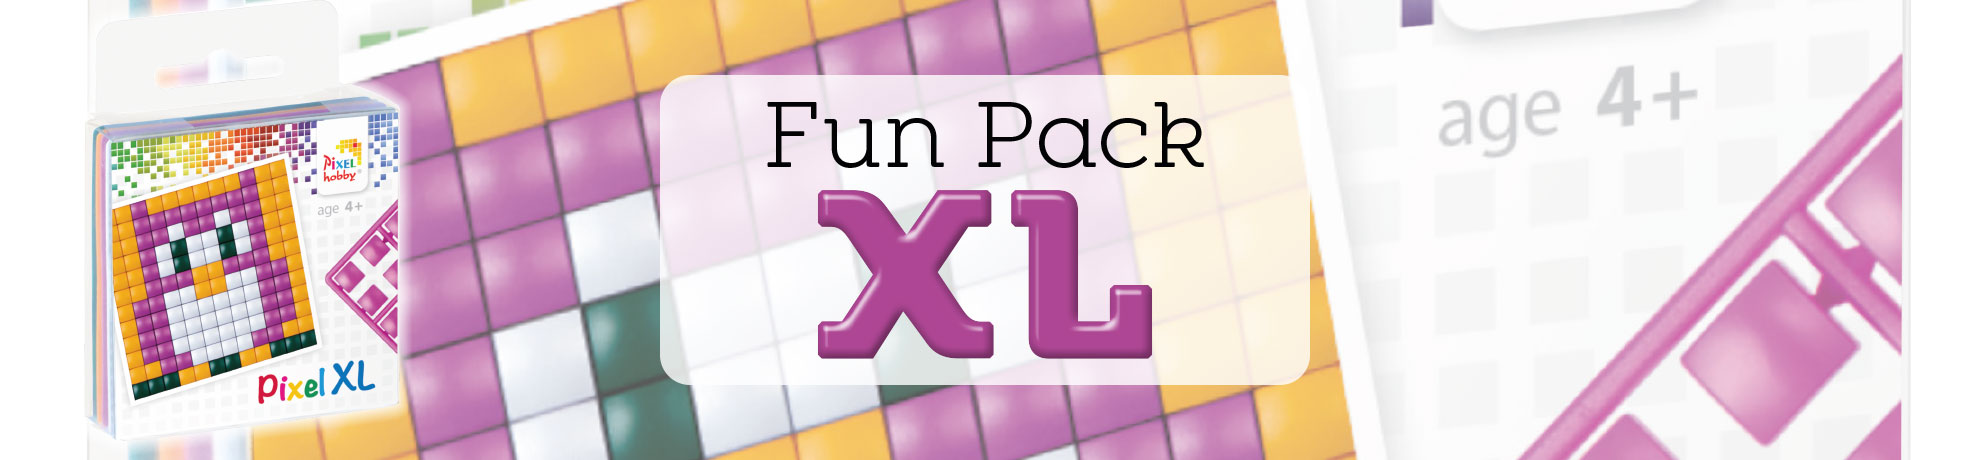 Xl Fun Pack